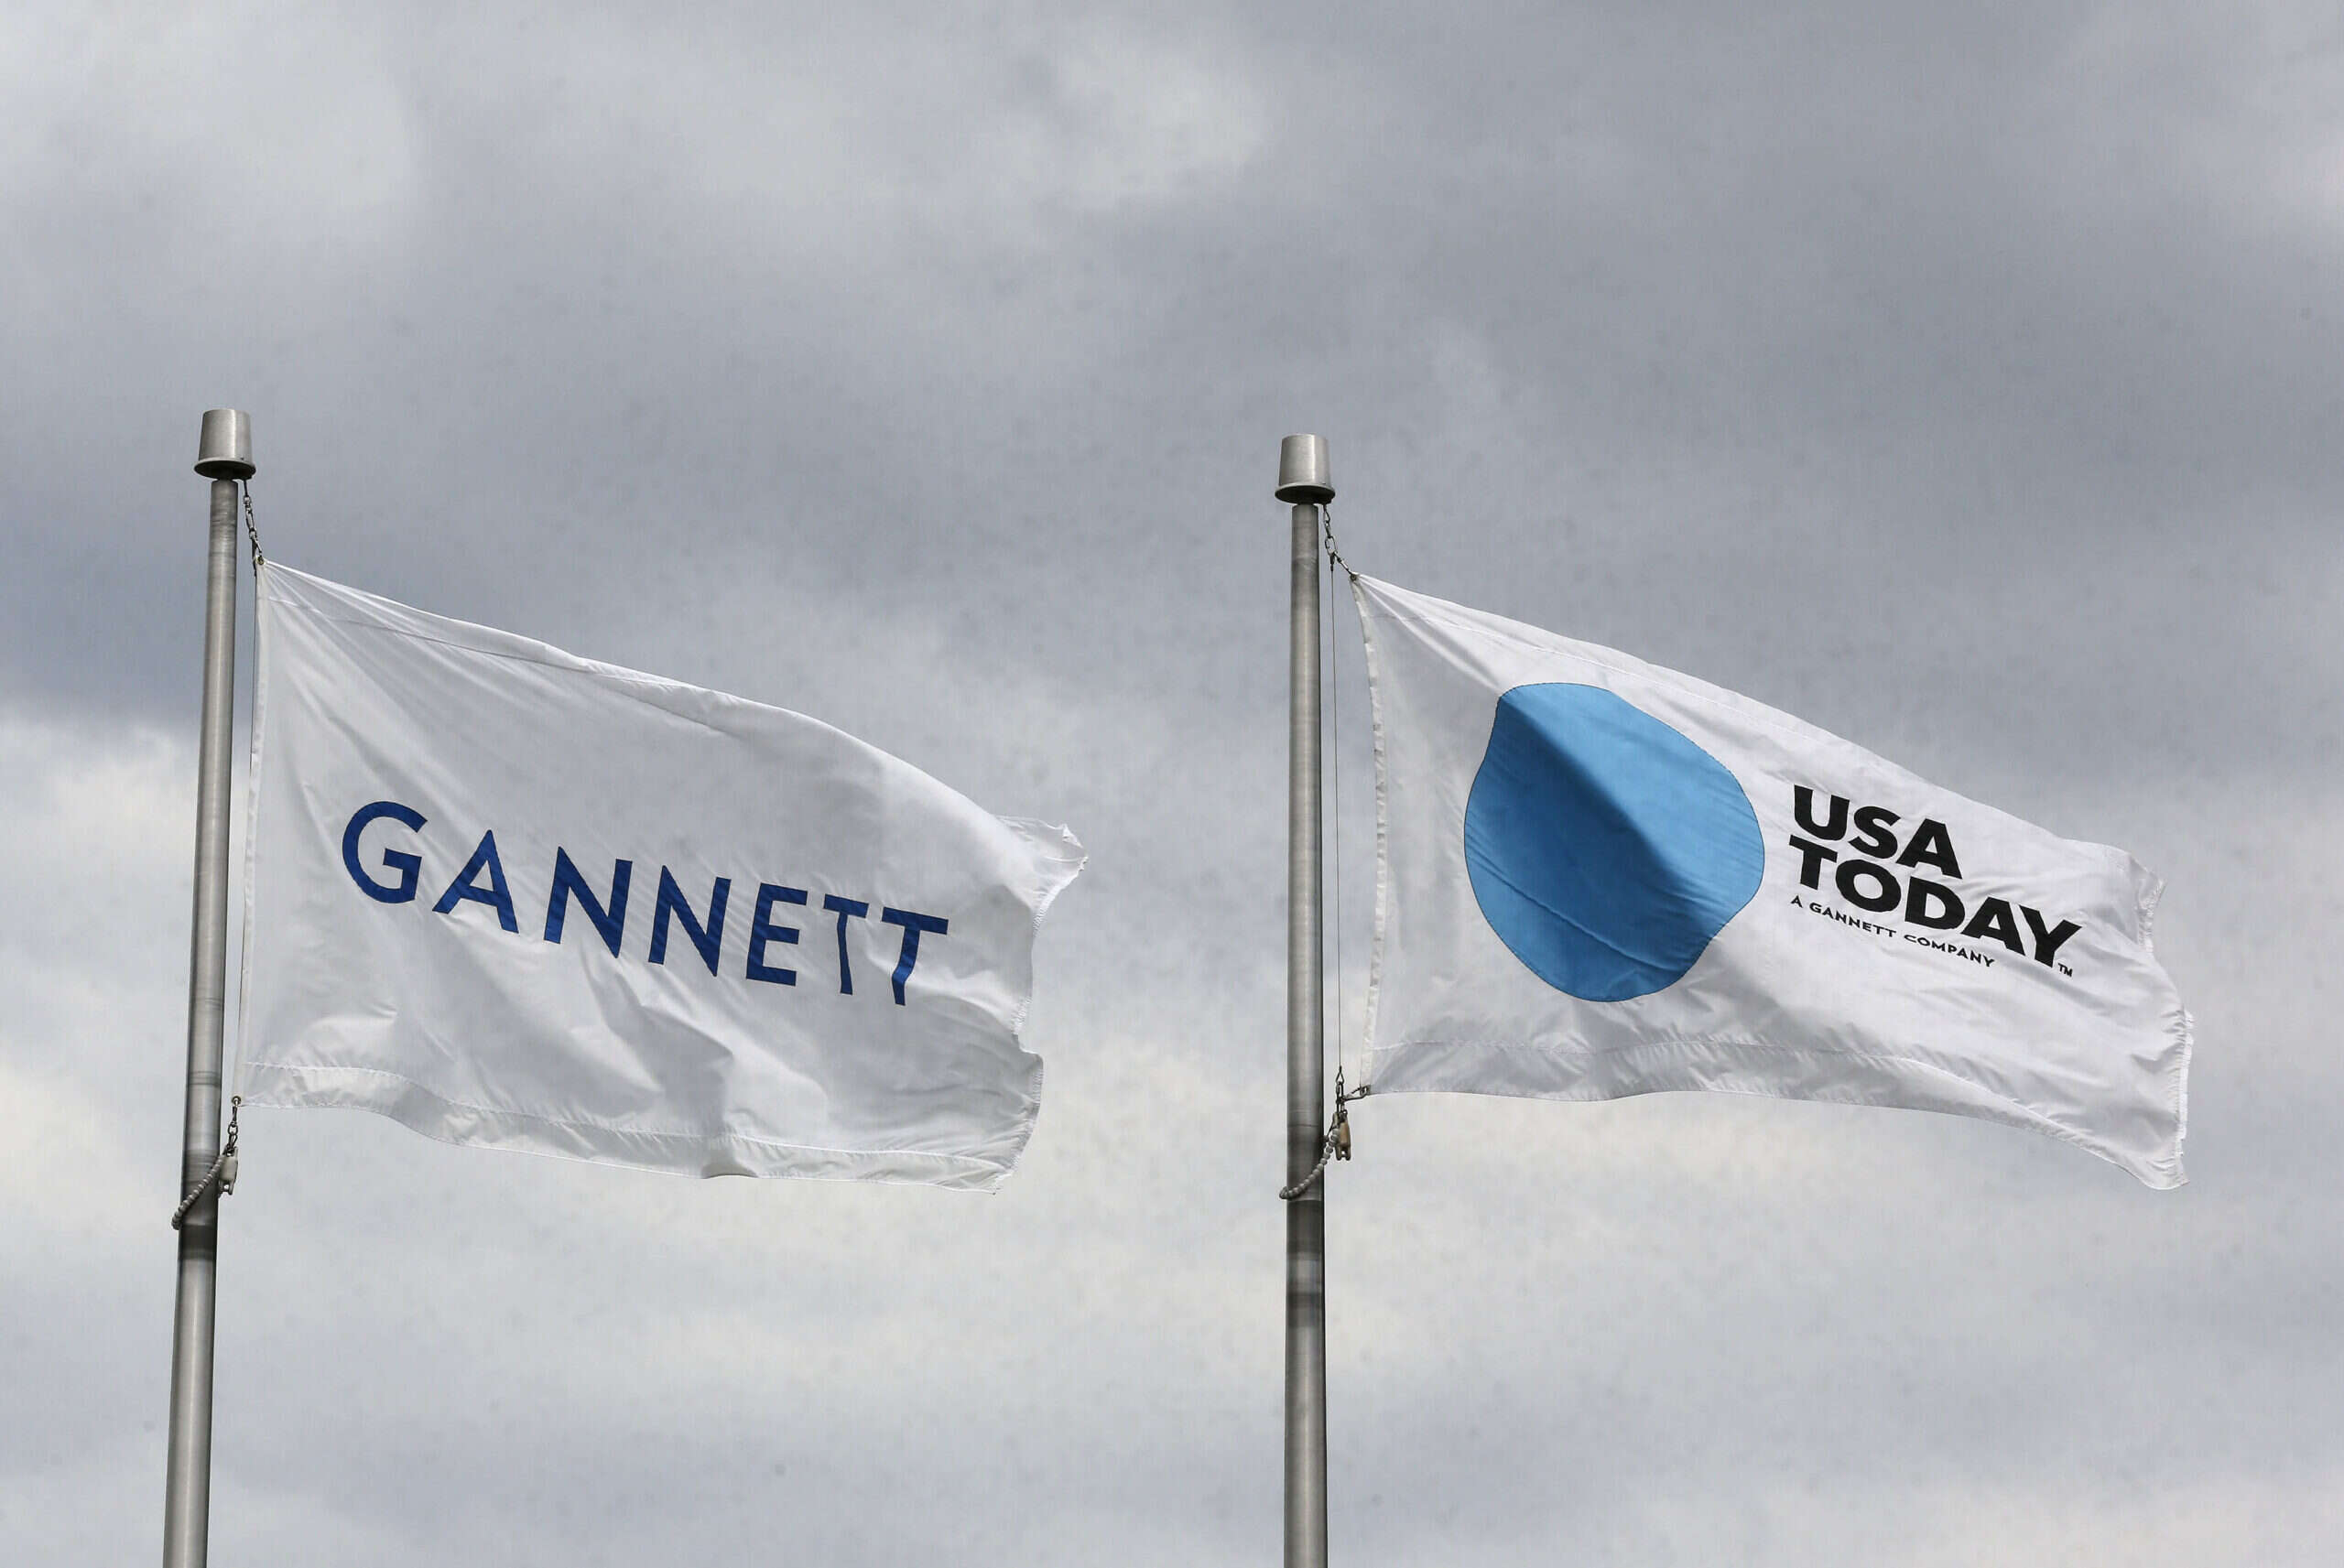 Gannett digital subscriptions and revenues grow again